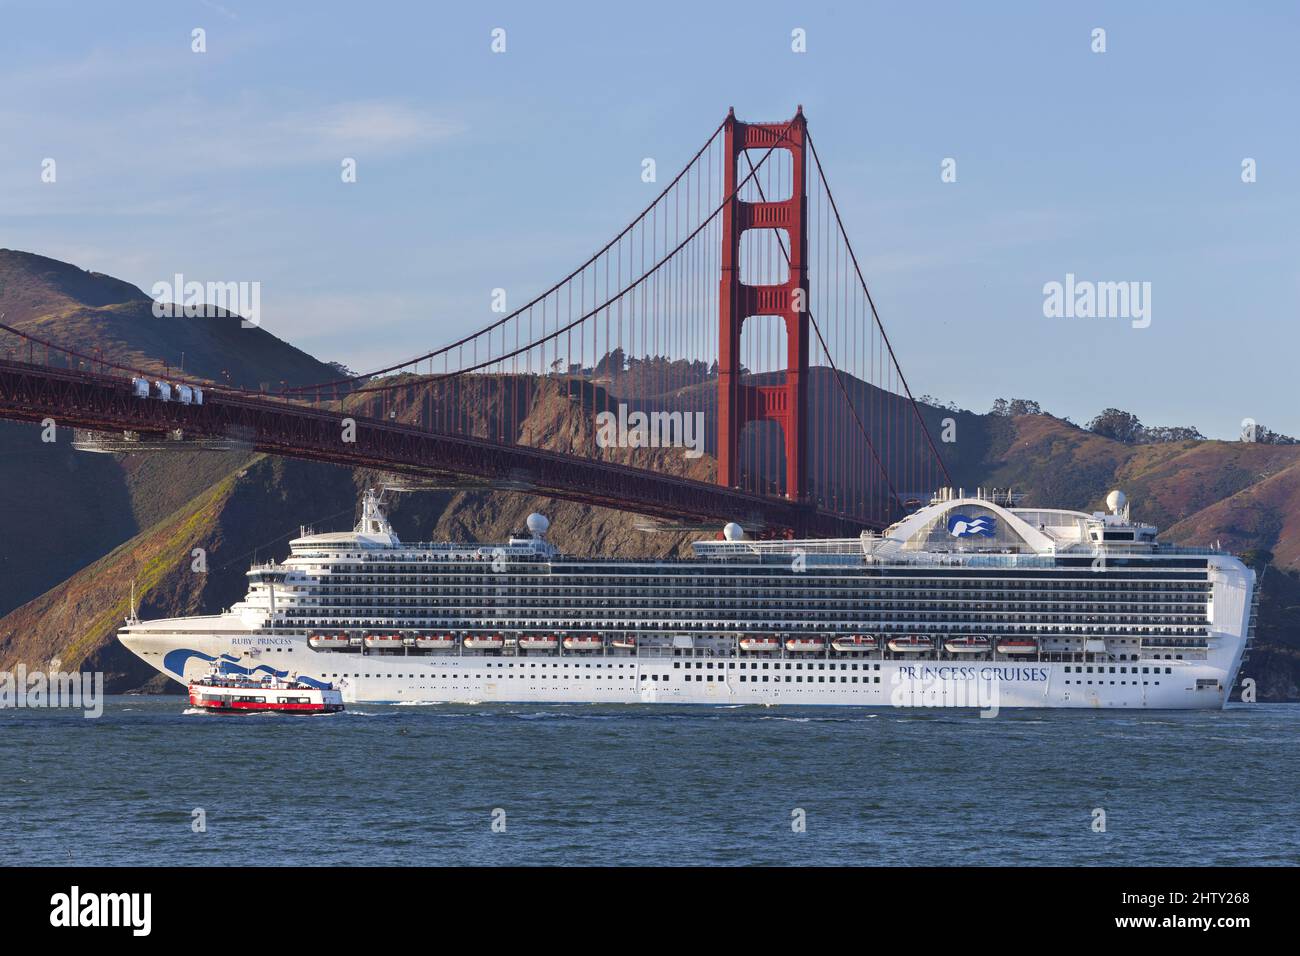 Princess Cruises Large Cruise Line Ship Sailing Out Under Famous Golden Gate Landmark Bridge. Scenic San Francisco California Bay Coast Landscape Stock Photo